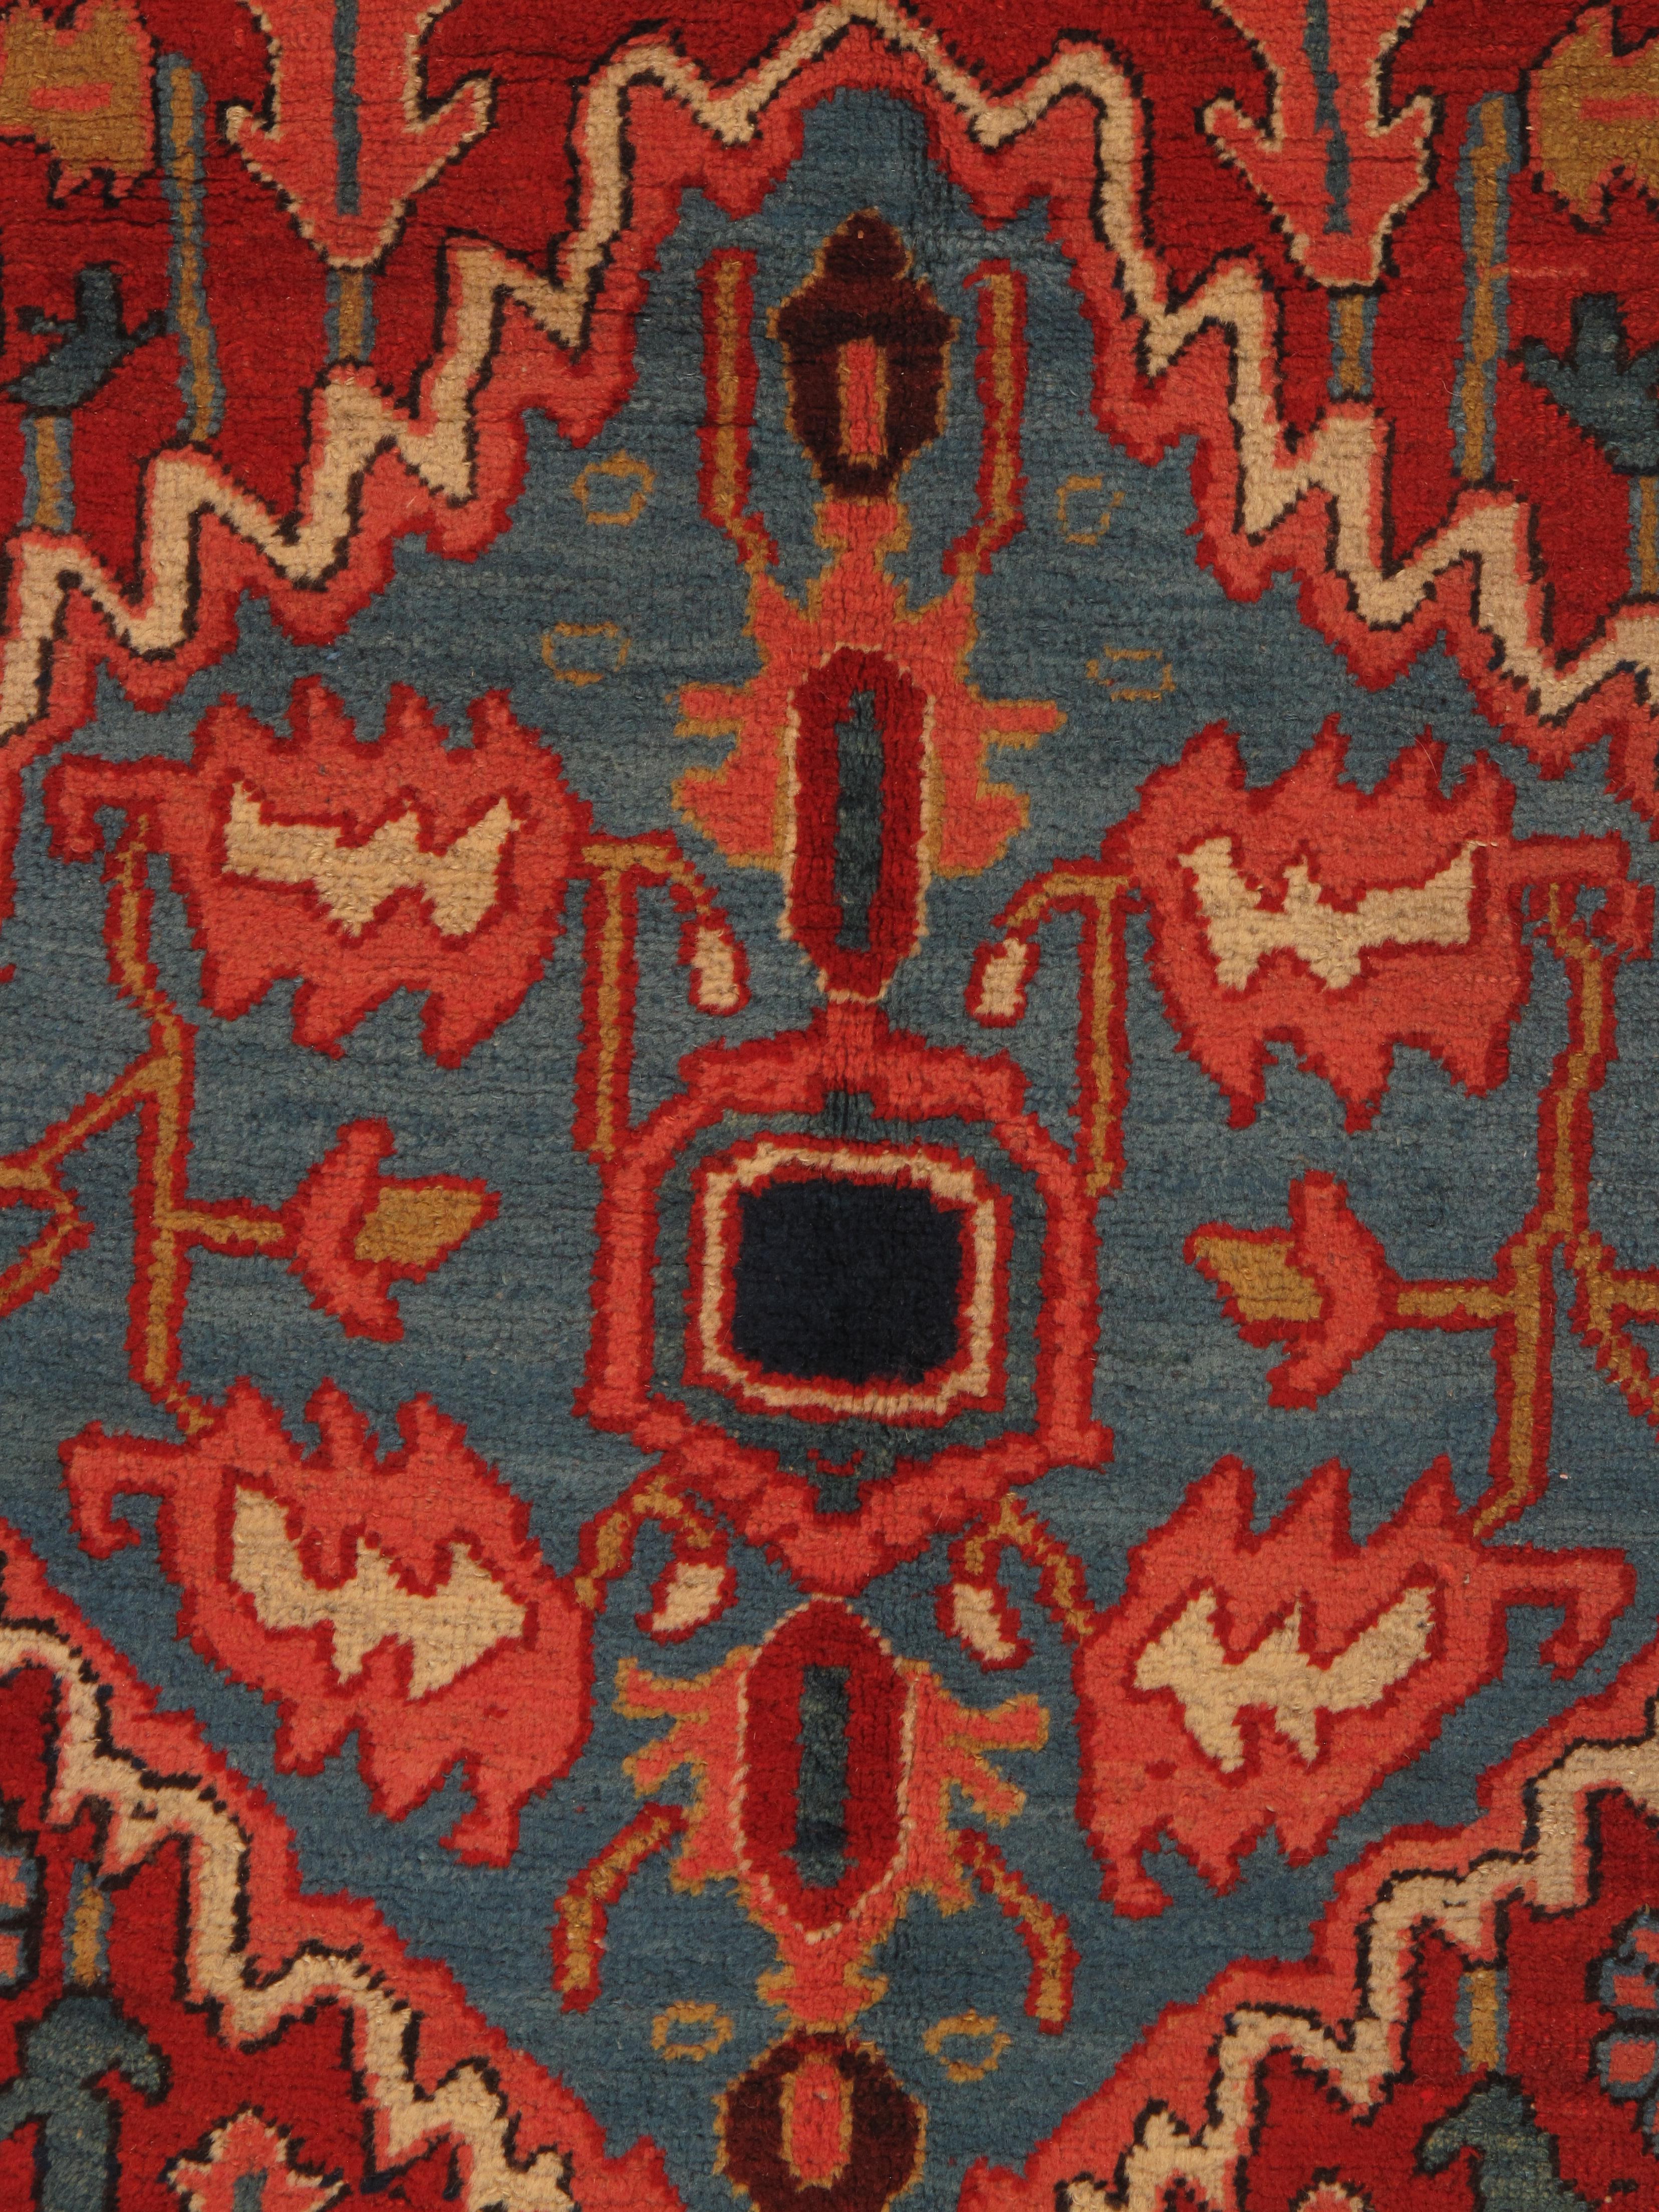 Antique Persian Serapi Carpet Handmade Wool Oriental Rug, Red, Ivory, Light Blue For Sale 2